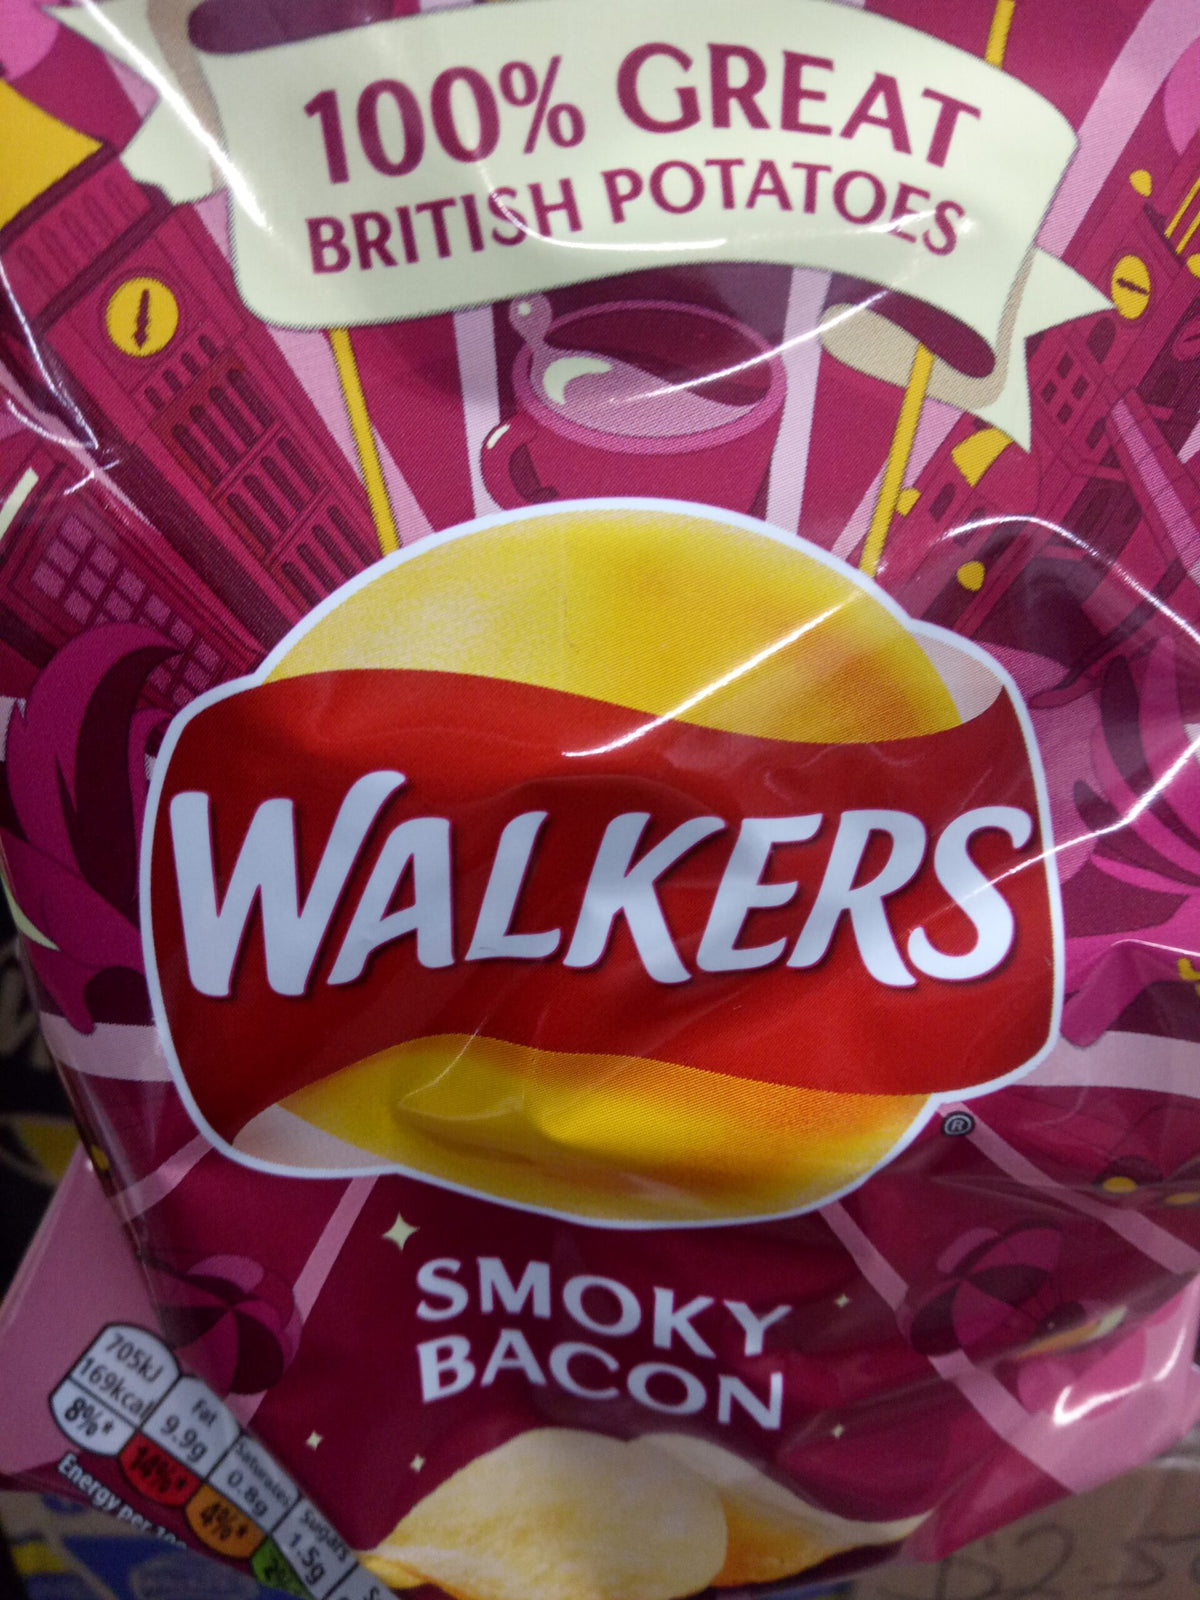 Walkers Smoky bacon crisps